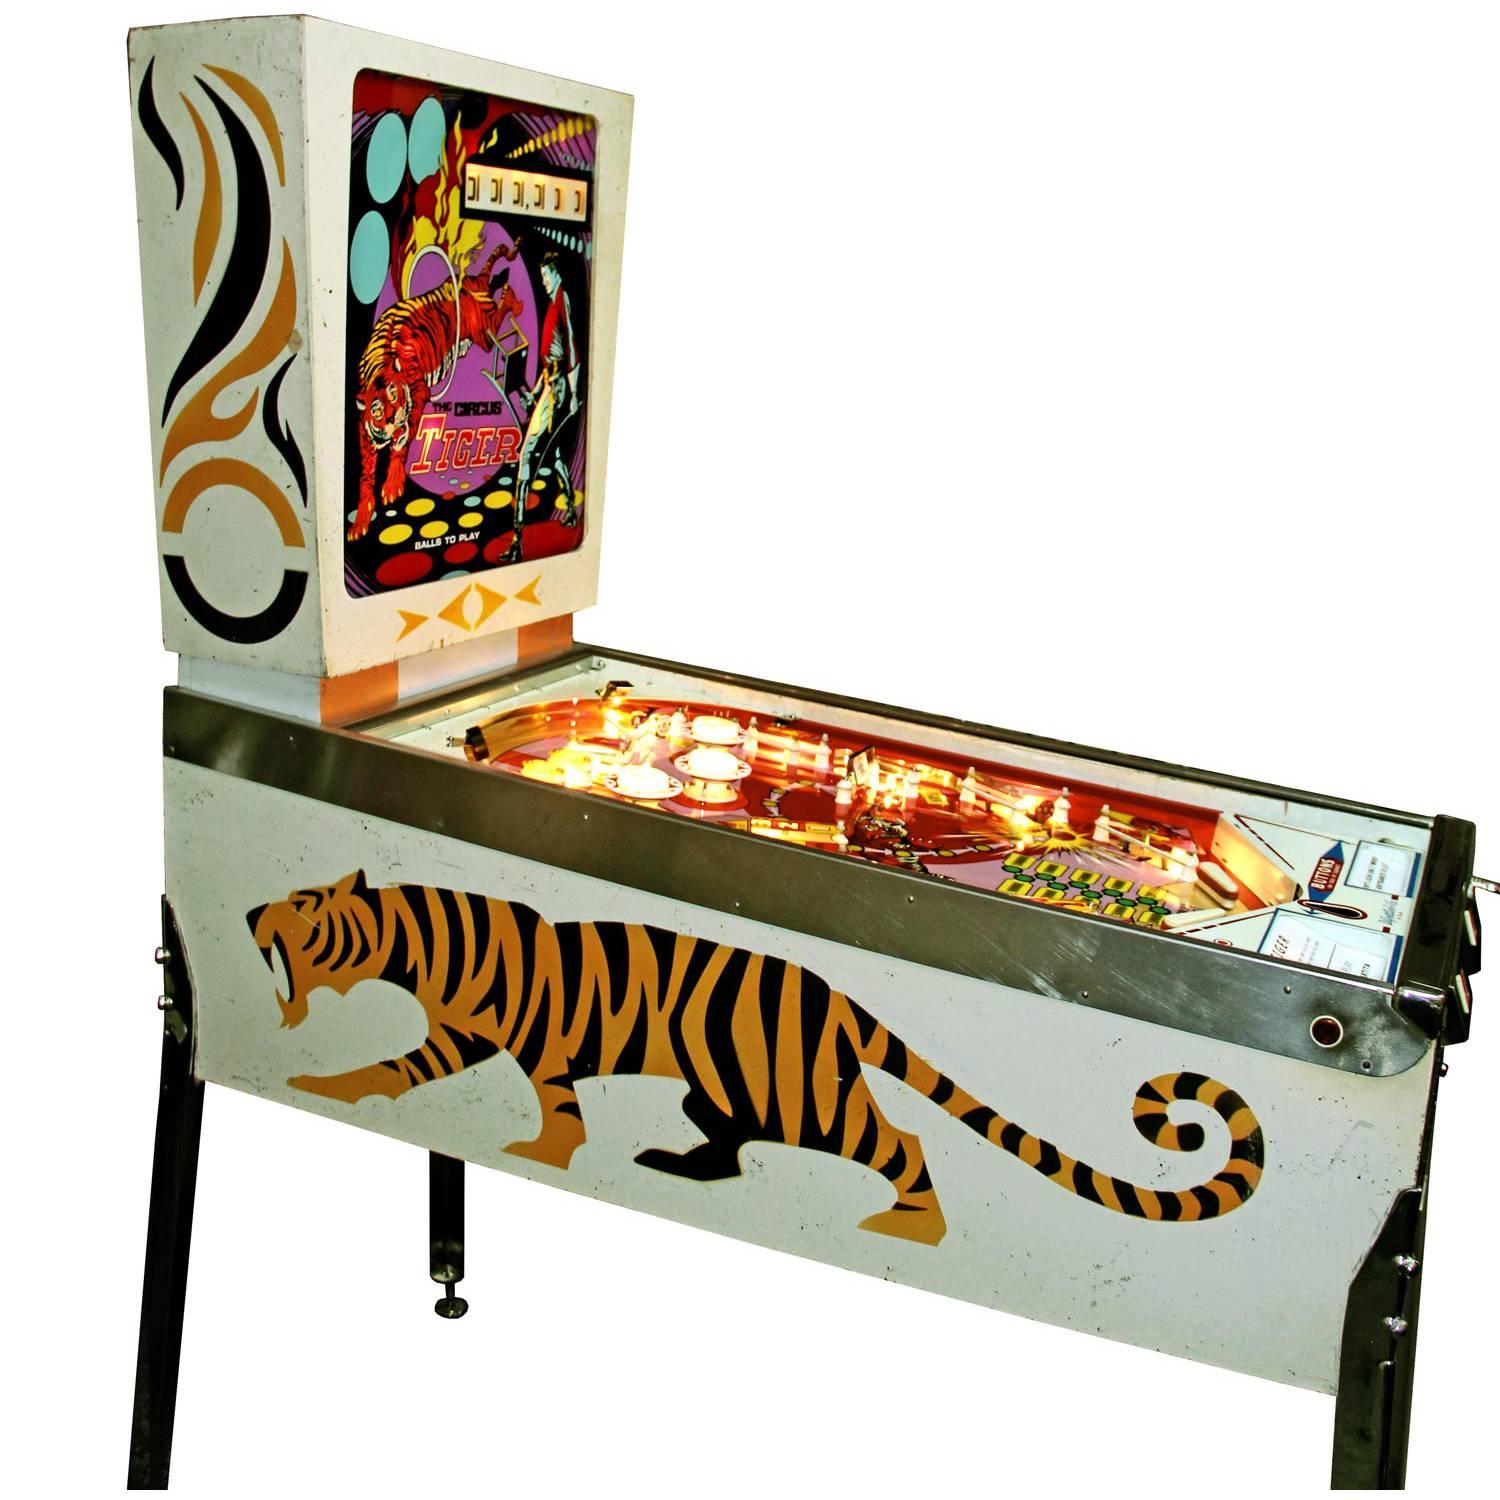 Gottlieb The Cirqus Tiger, Vintage Pinball Machine 1975, Fully Restored For Sale